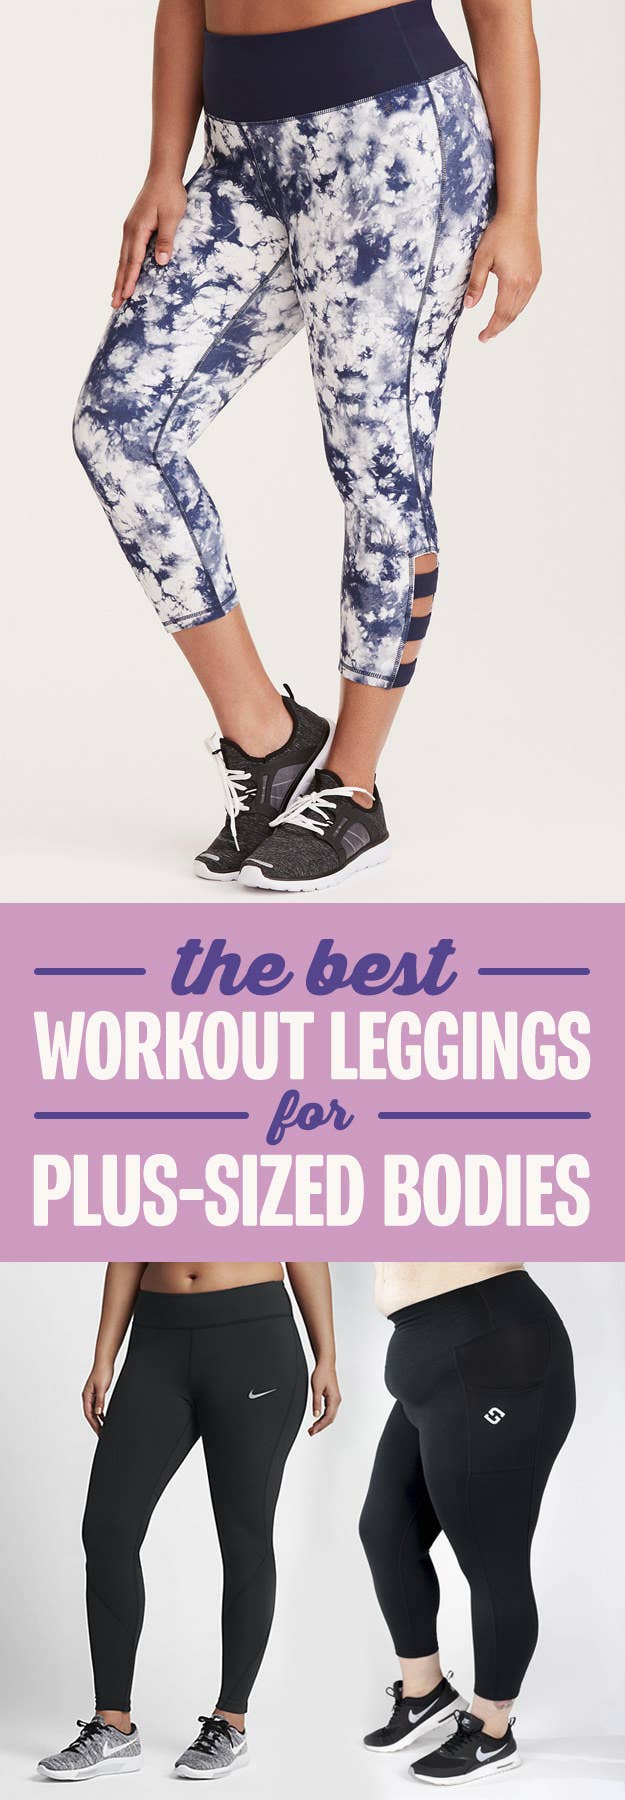 16 Jeans Plus Size Mesh Tik Tok Leggings Tights Activewear Fitness Workout  hot pants @ Best Price Online